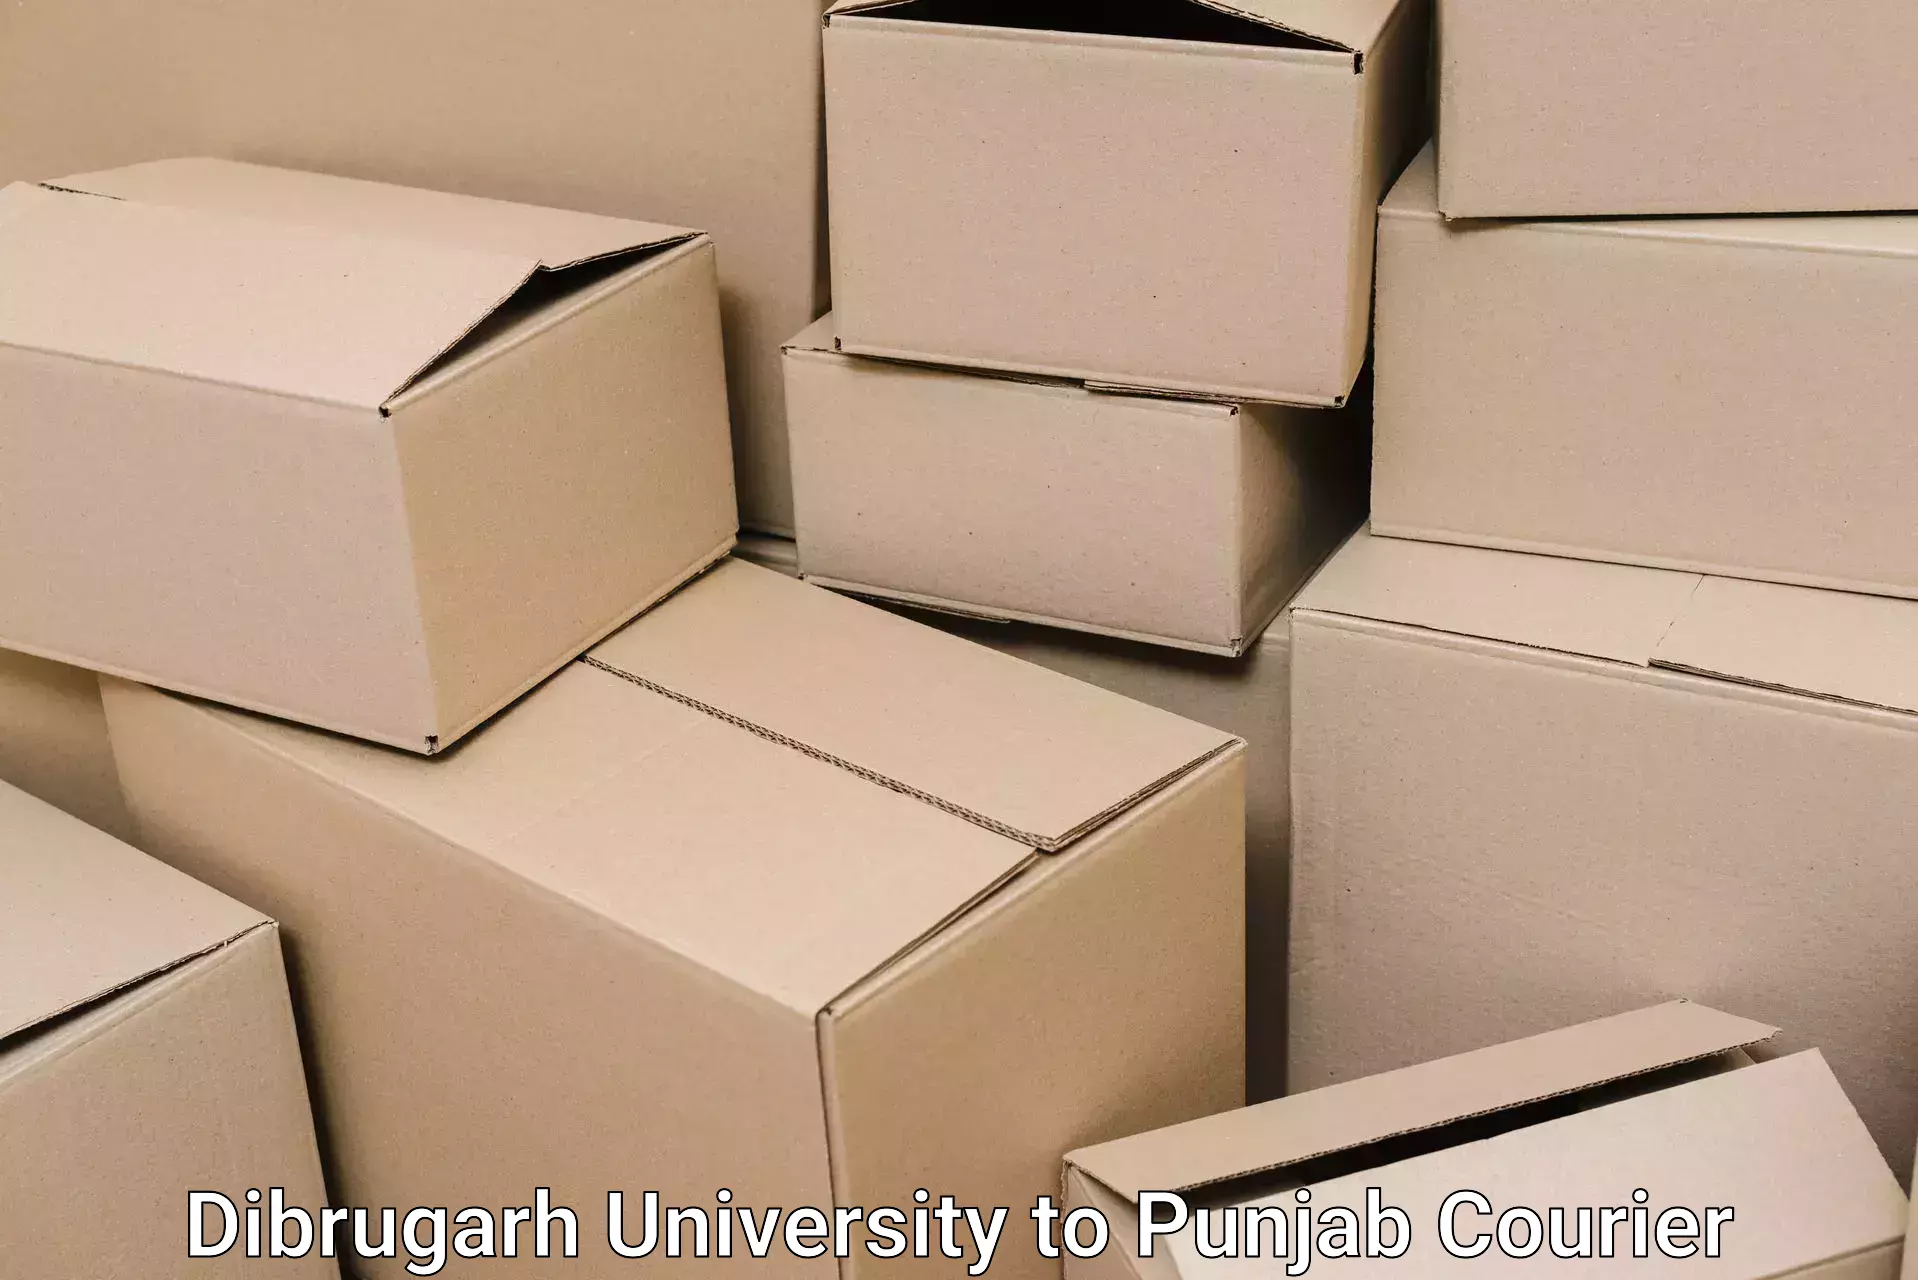 Home goods moving company Dibrugarh University to Mandi Gobindgarh